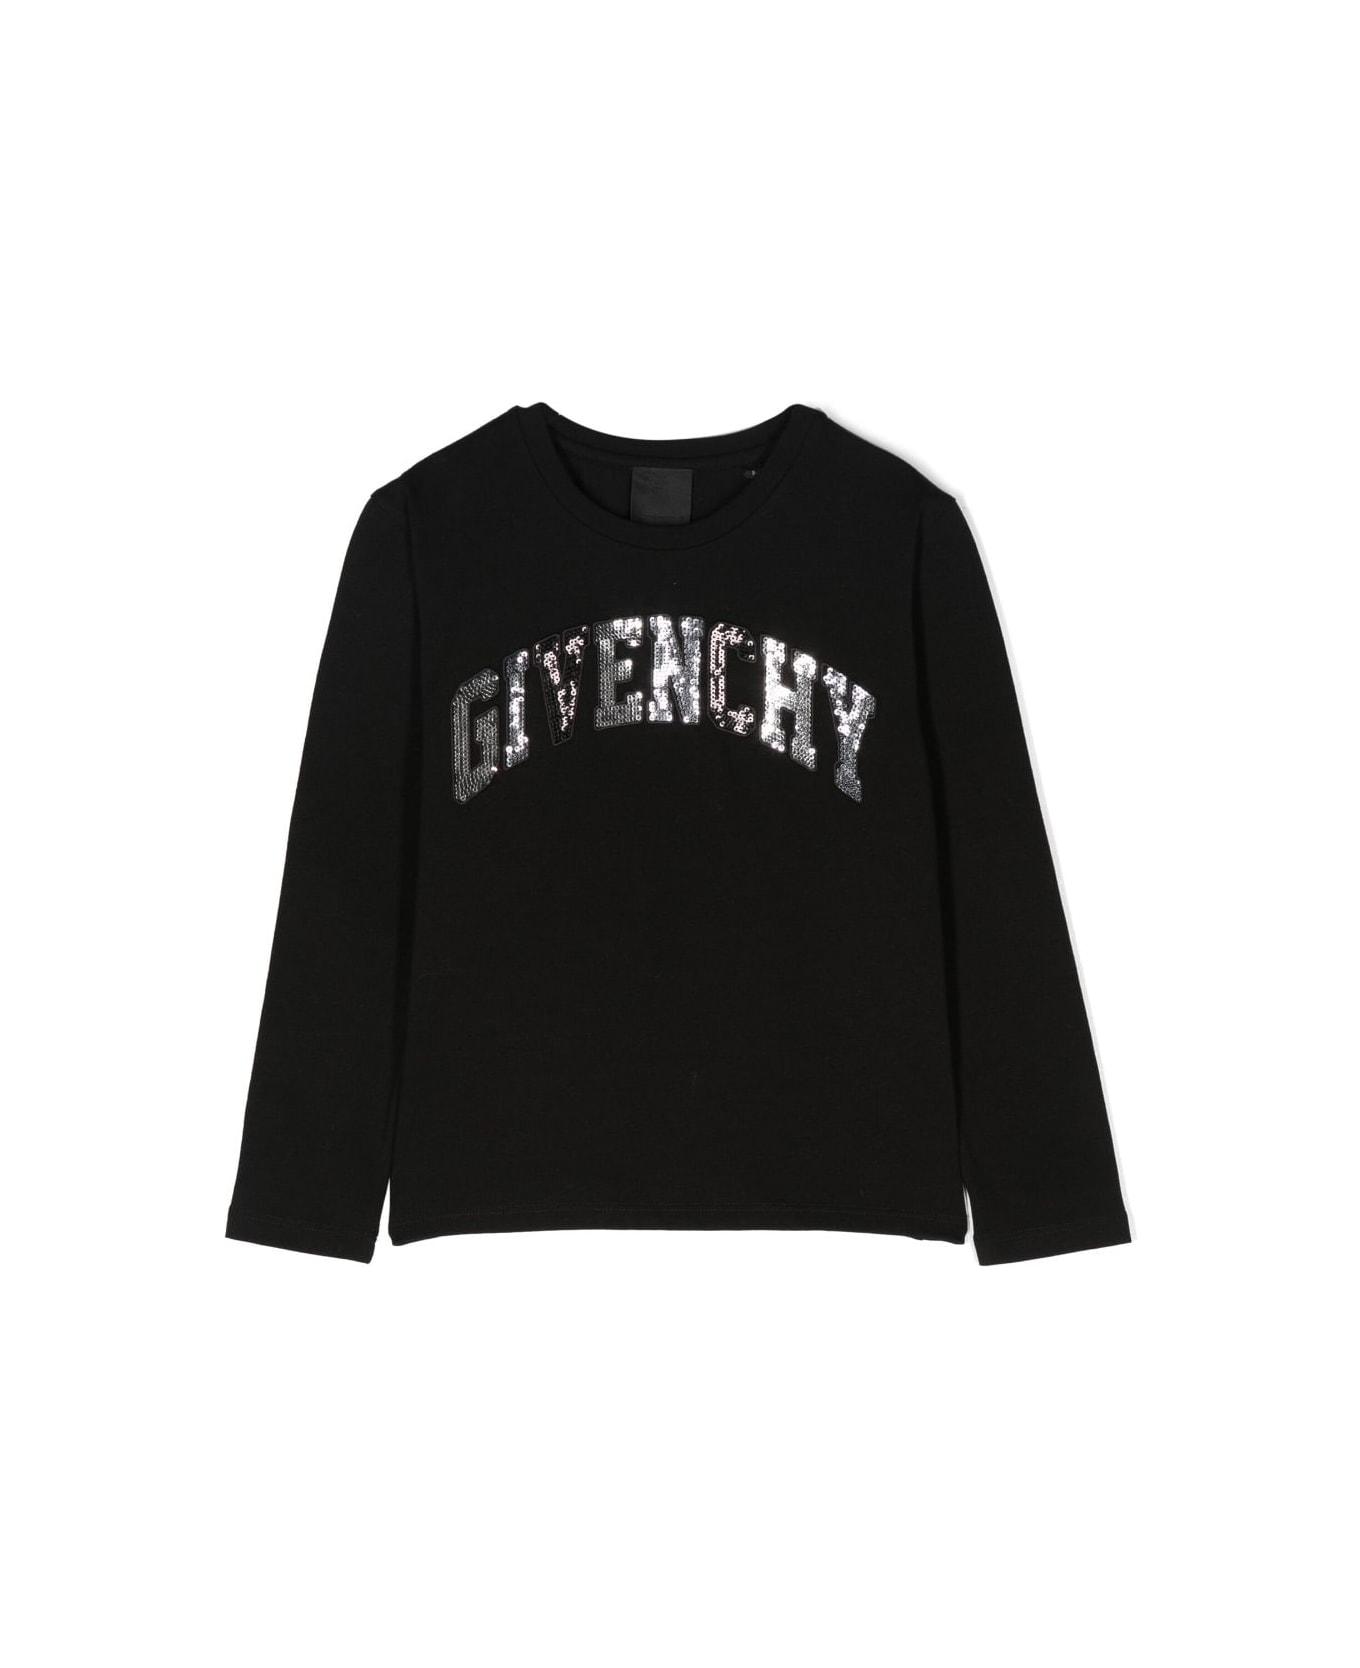 Givenchy T-shirt Nera In Jersey Di Cotone Bambina - Nero